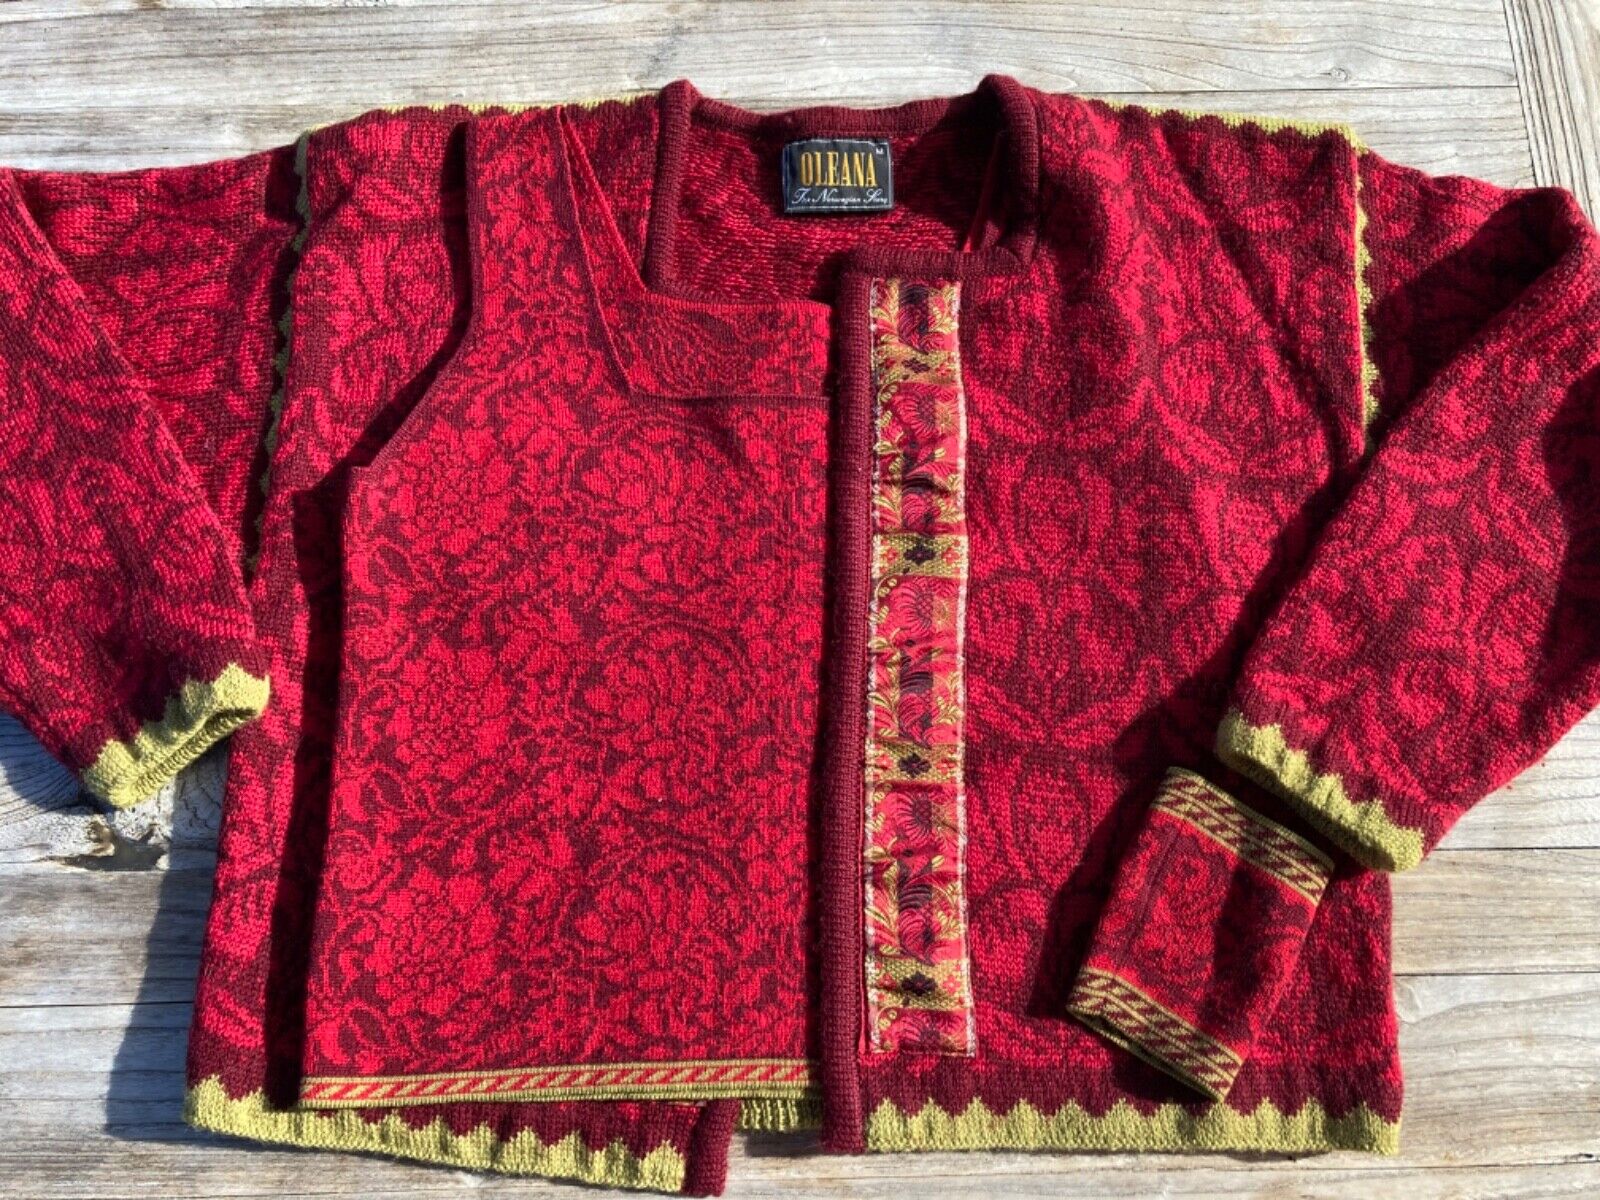 Oleana of Norway sweater M, | eBay